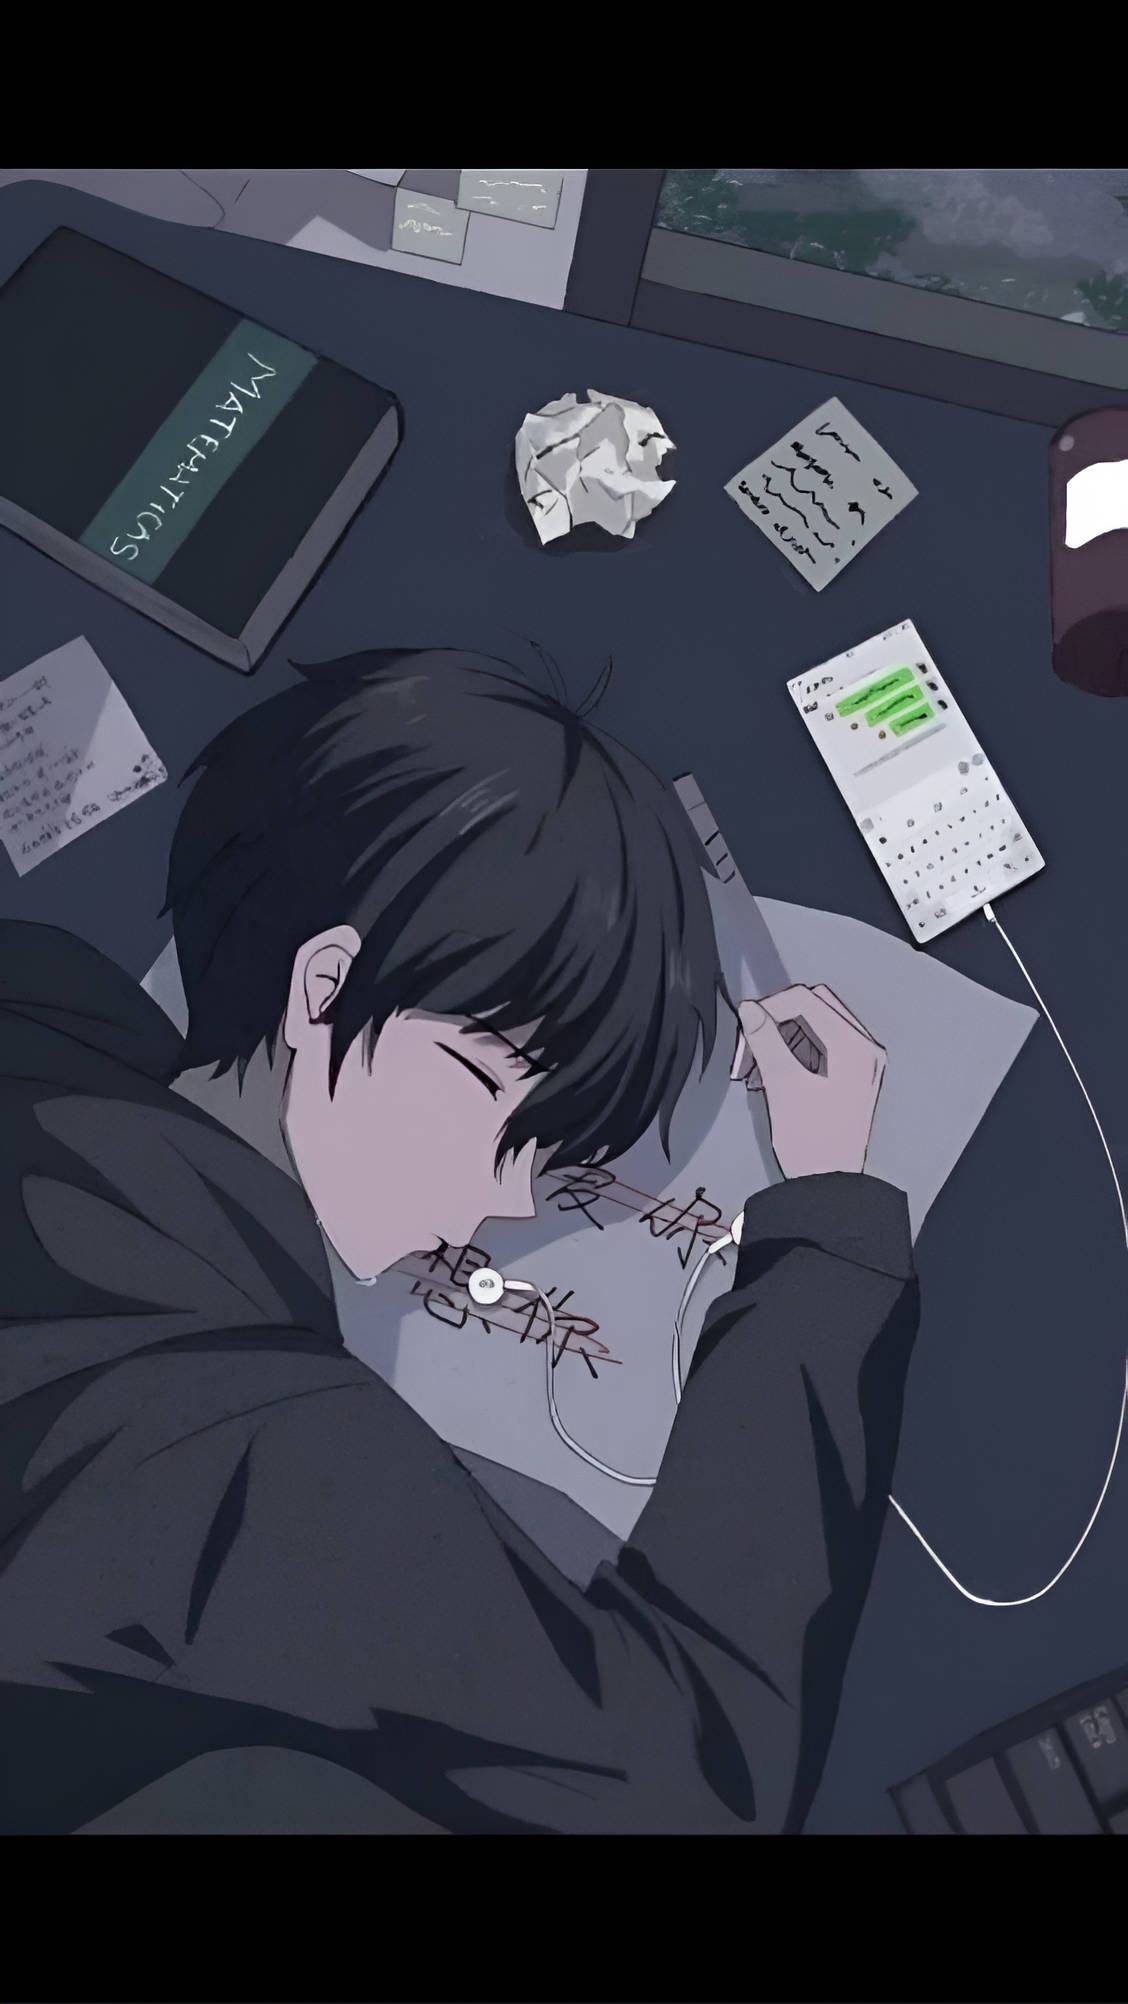 Broken Heart Sad Anime Boy Sleeping While Studying